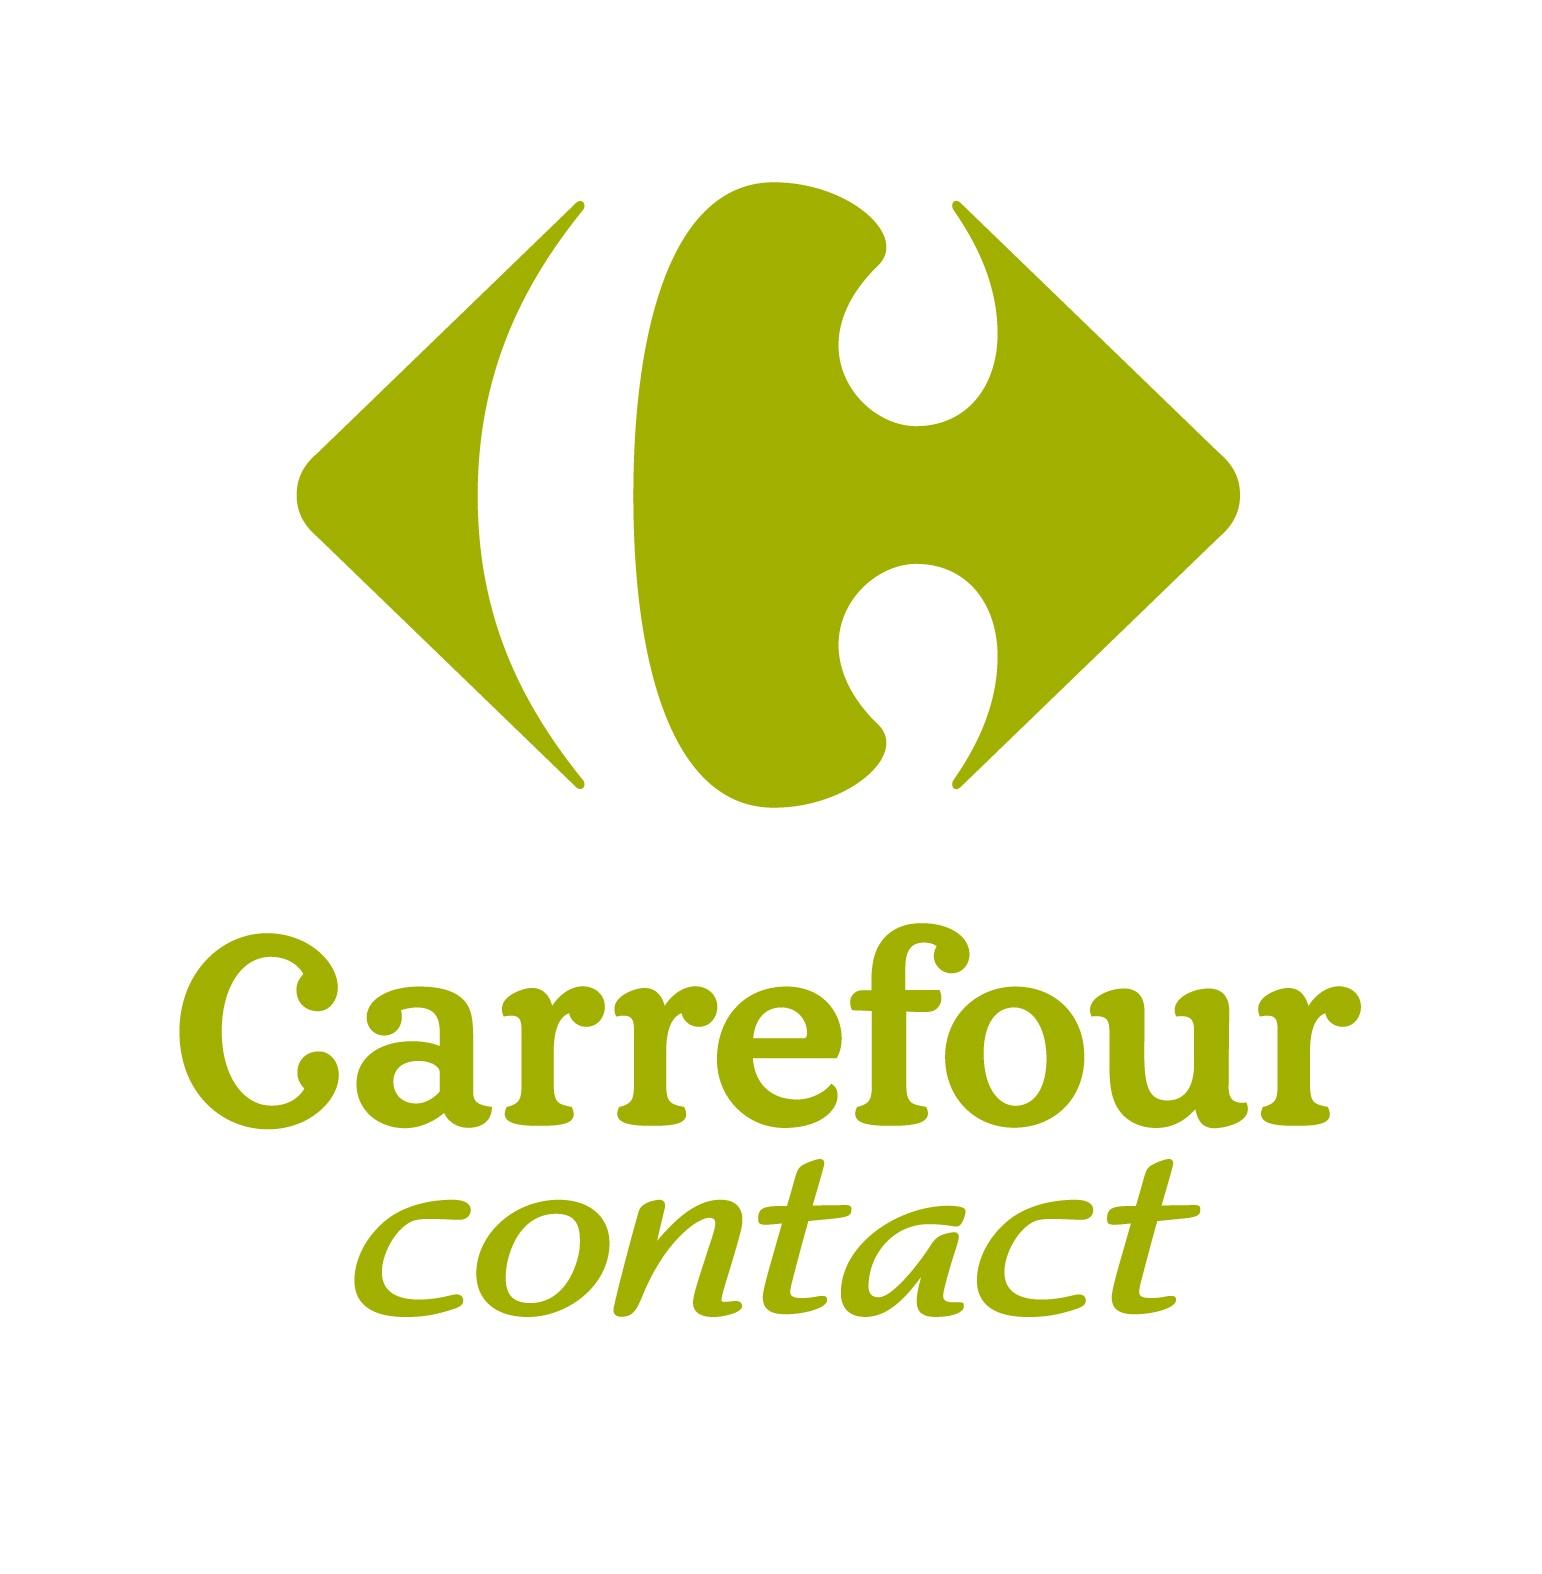 Carrefour Contact Nieppe